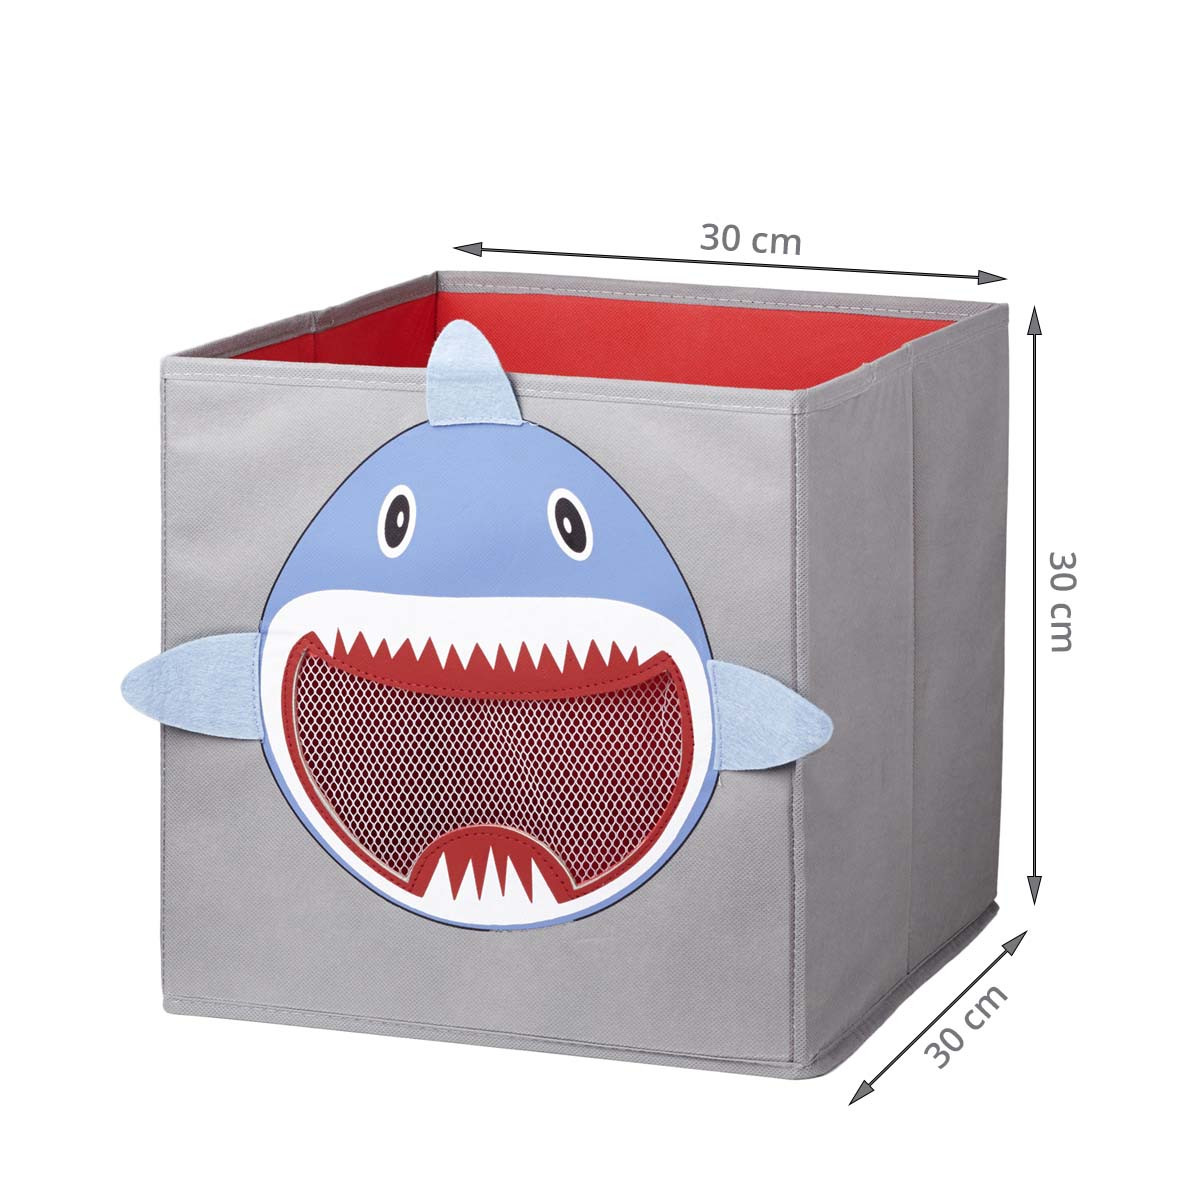 Cube de rangement tissu 30x30x30 - Cdiscount